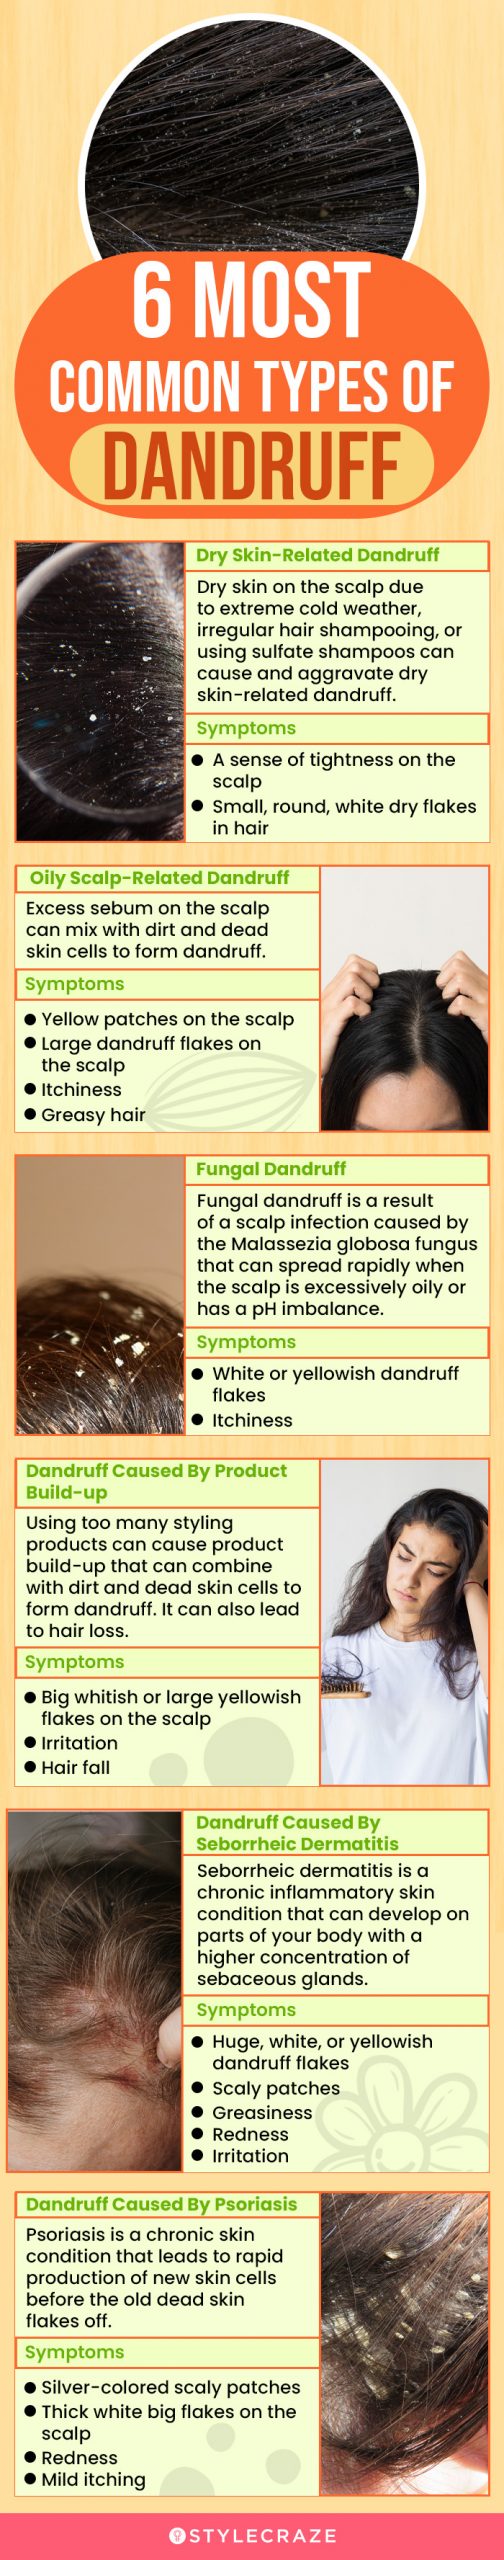 dandruff vs seborrheic dermatitis